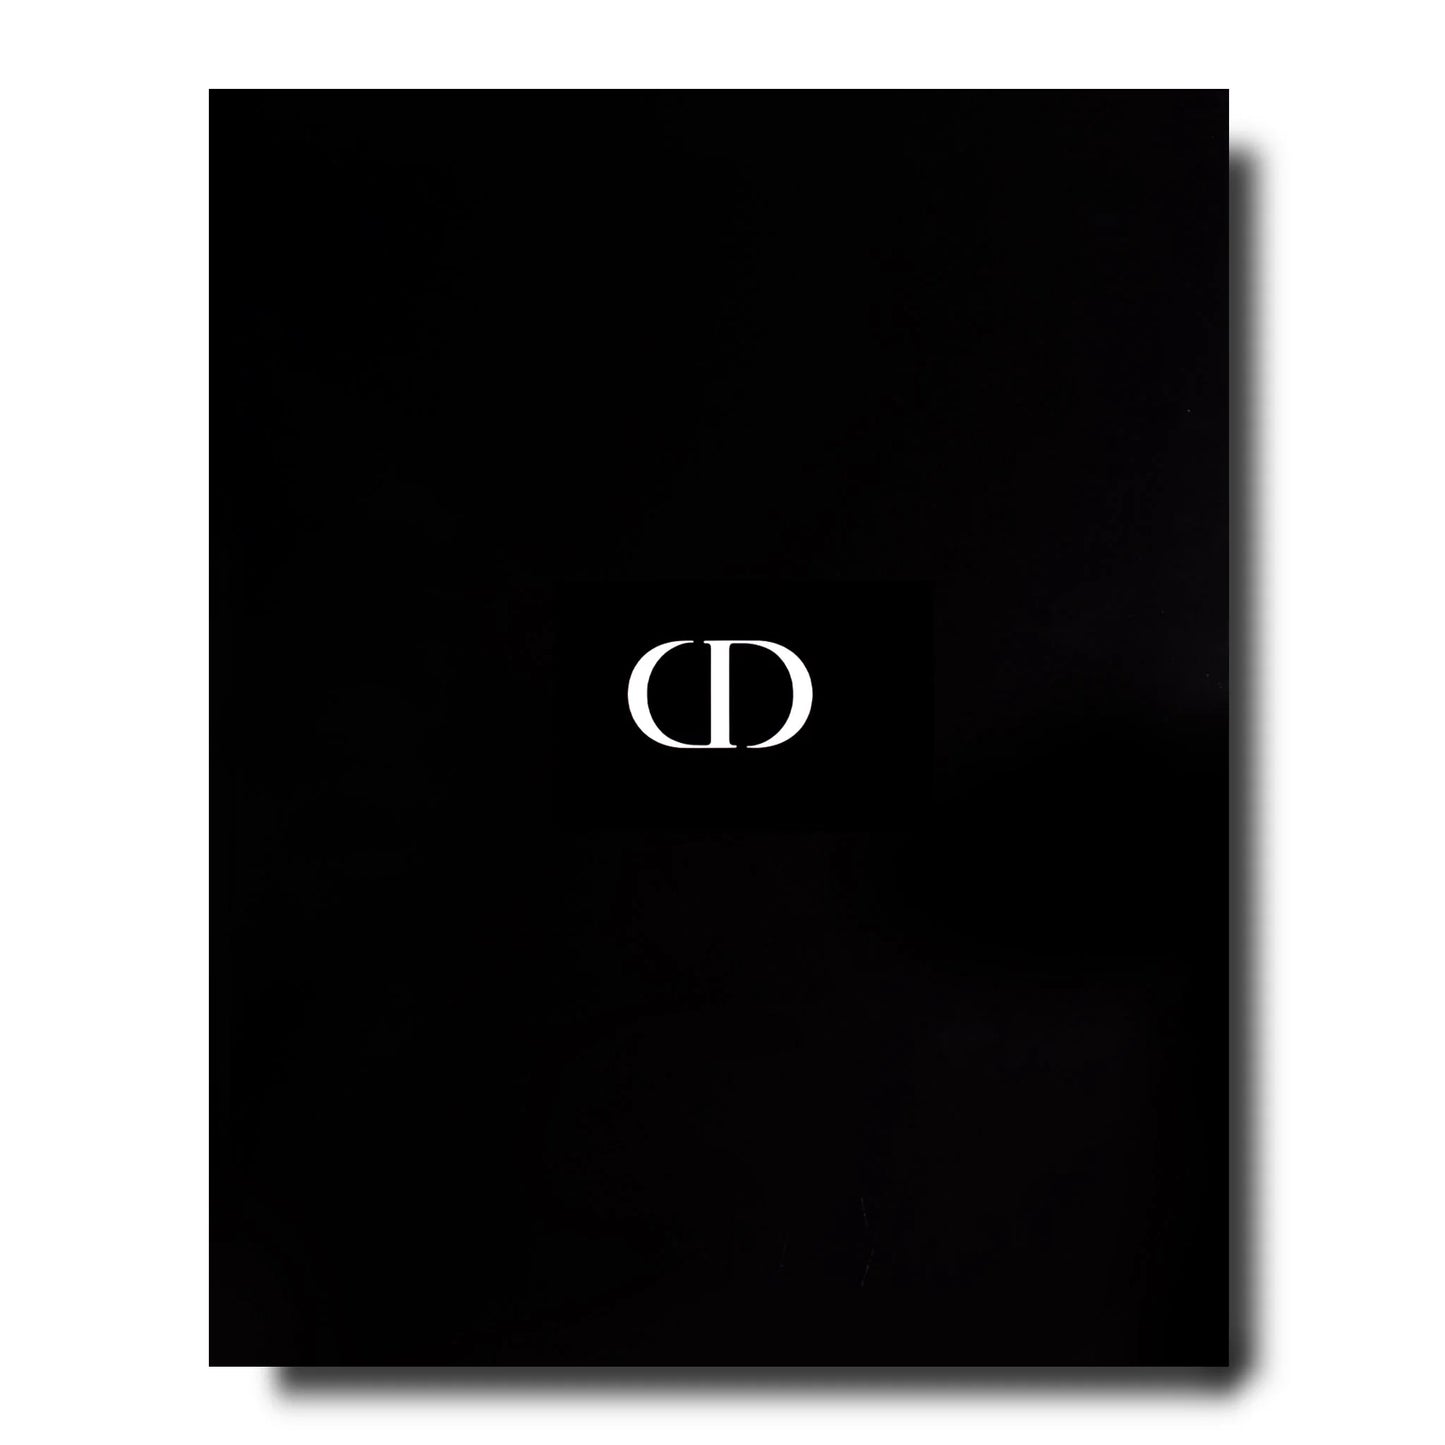 Dior-Buch von Raf Simons